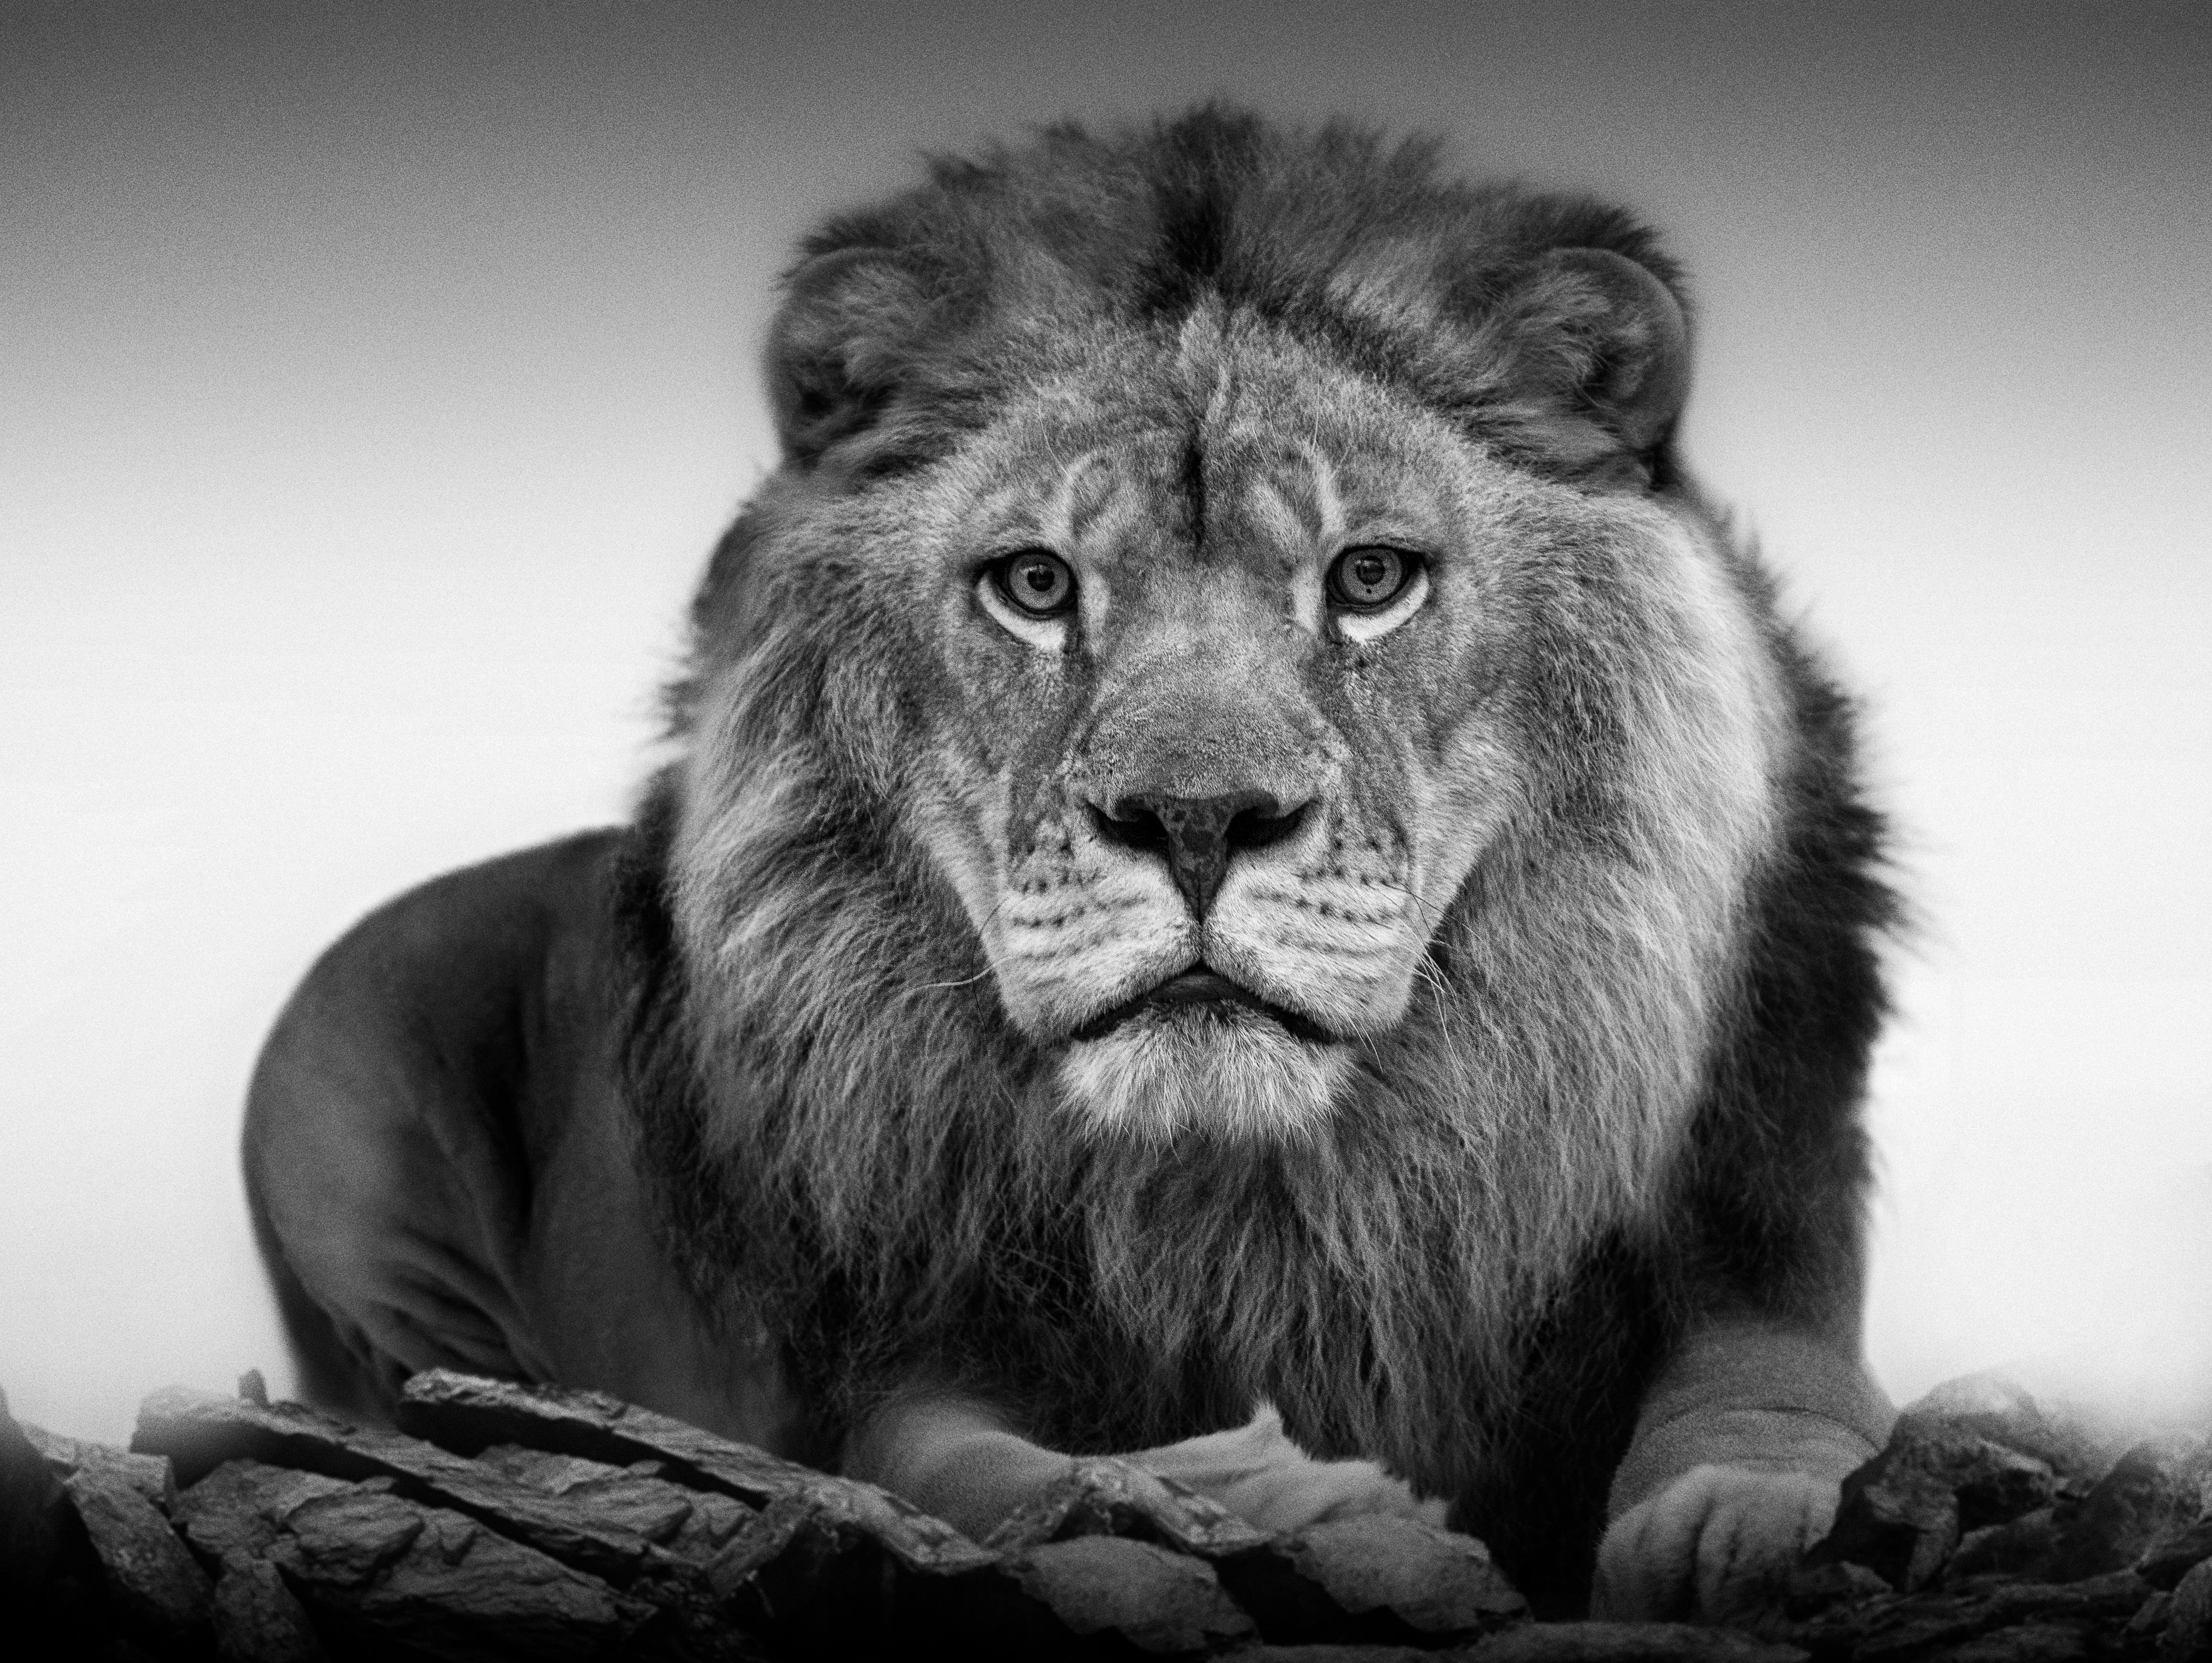 Shane Russeck Animal Print - 40x60 "Lion Portrait"  Black and White Lion Photography, Photograph Unsigned Art